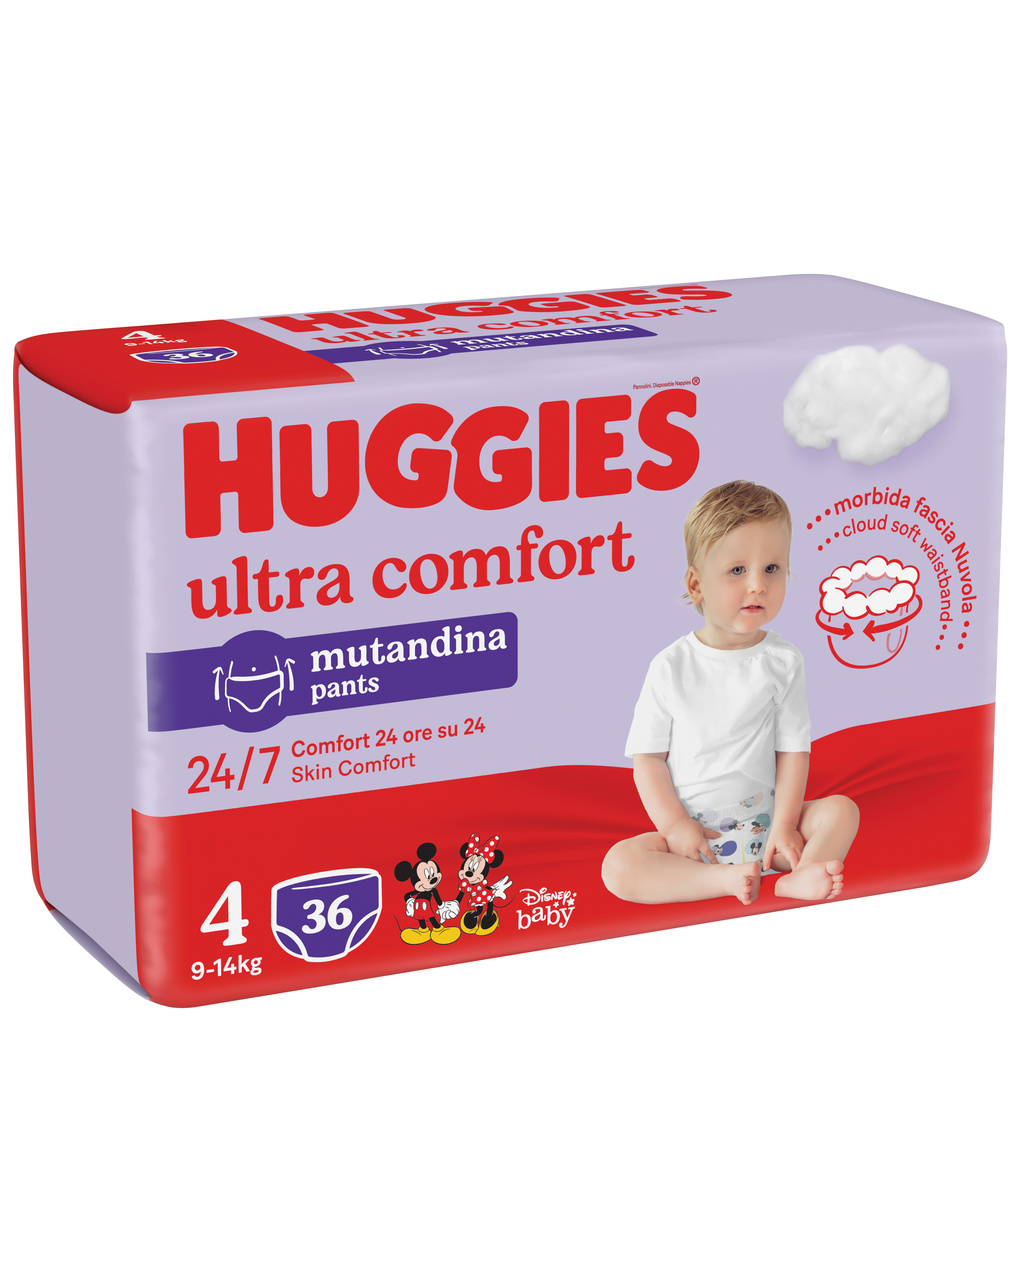 Pannolini ultra comfort mutandina tg.4 – 36 pezzi – huggies